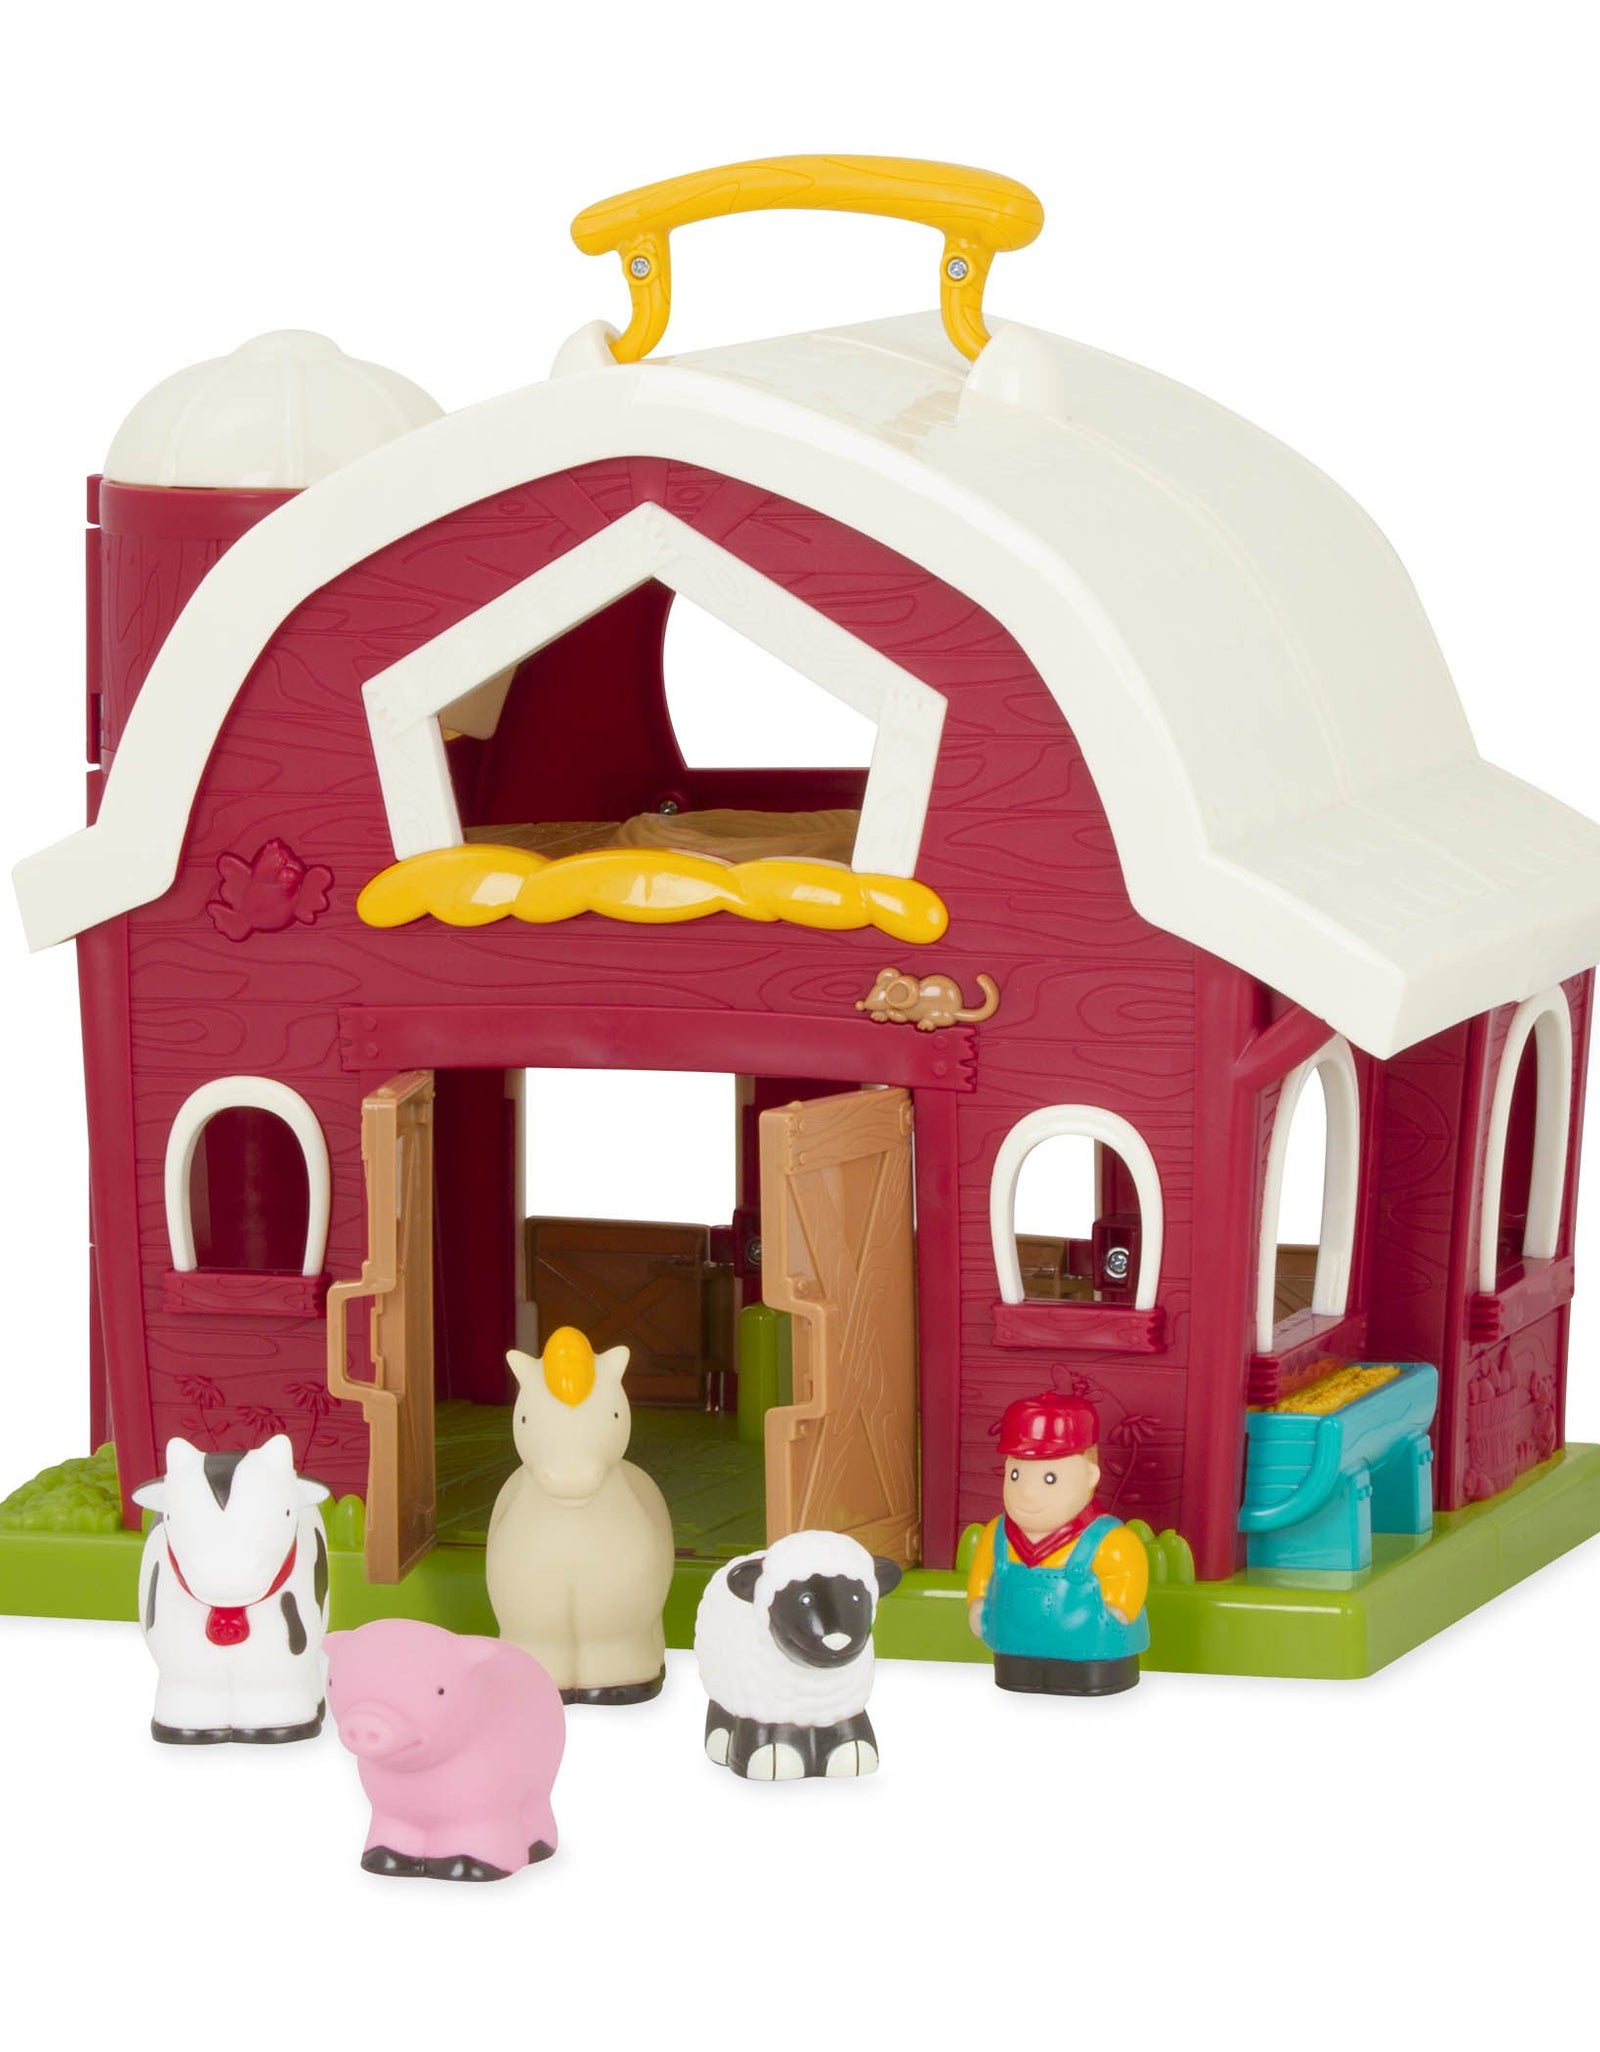 Battat – Big Red Barn – Animal Farm Playset for Toddlers 18M+ (6Piece), Dark Red, 13.5" Large x 9" W x 12" H